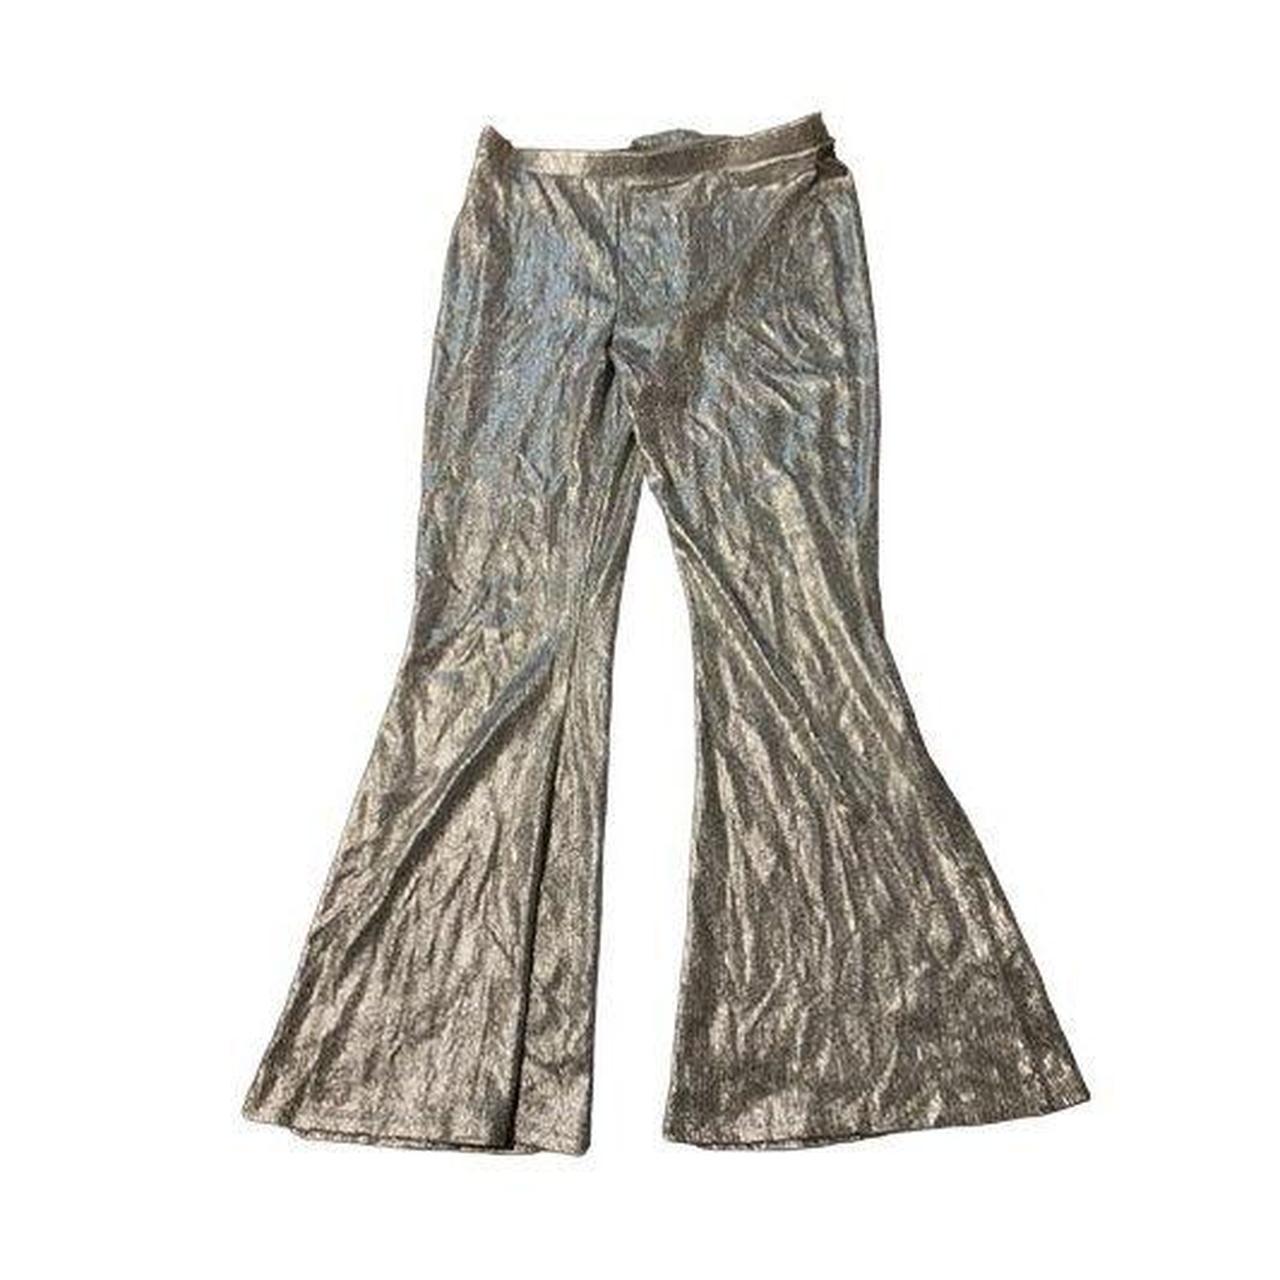 Art class shiny silver pants size 2XL 16/18 flared... - Depop